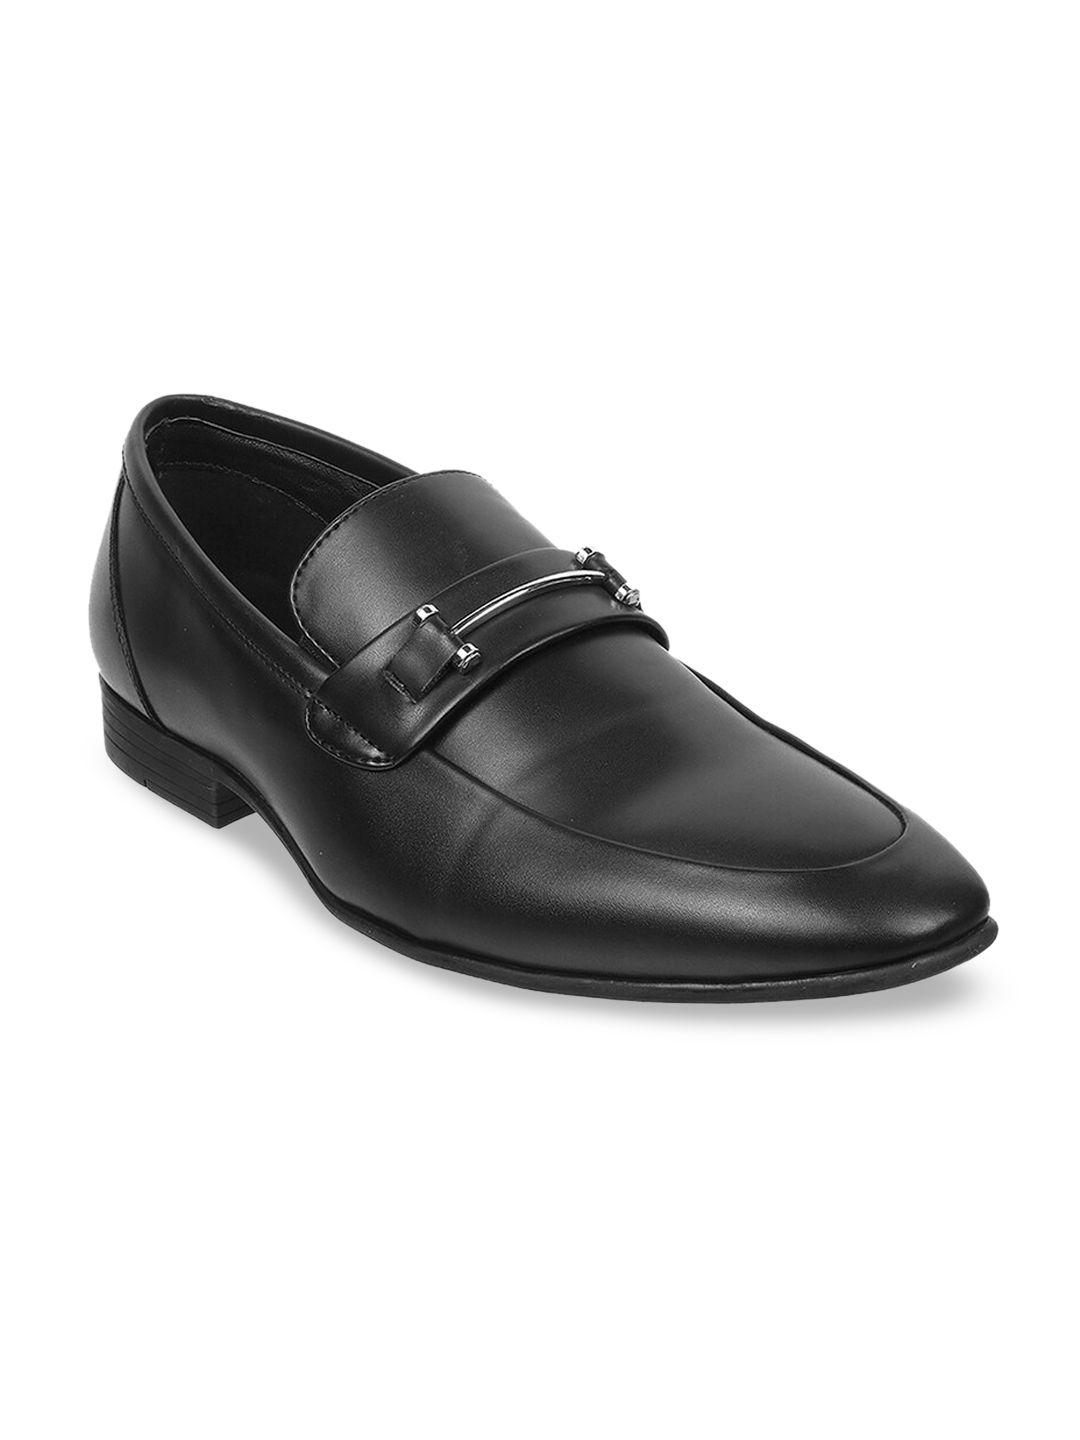 mochi-men-leather-formal-loafers